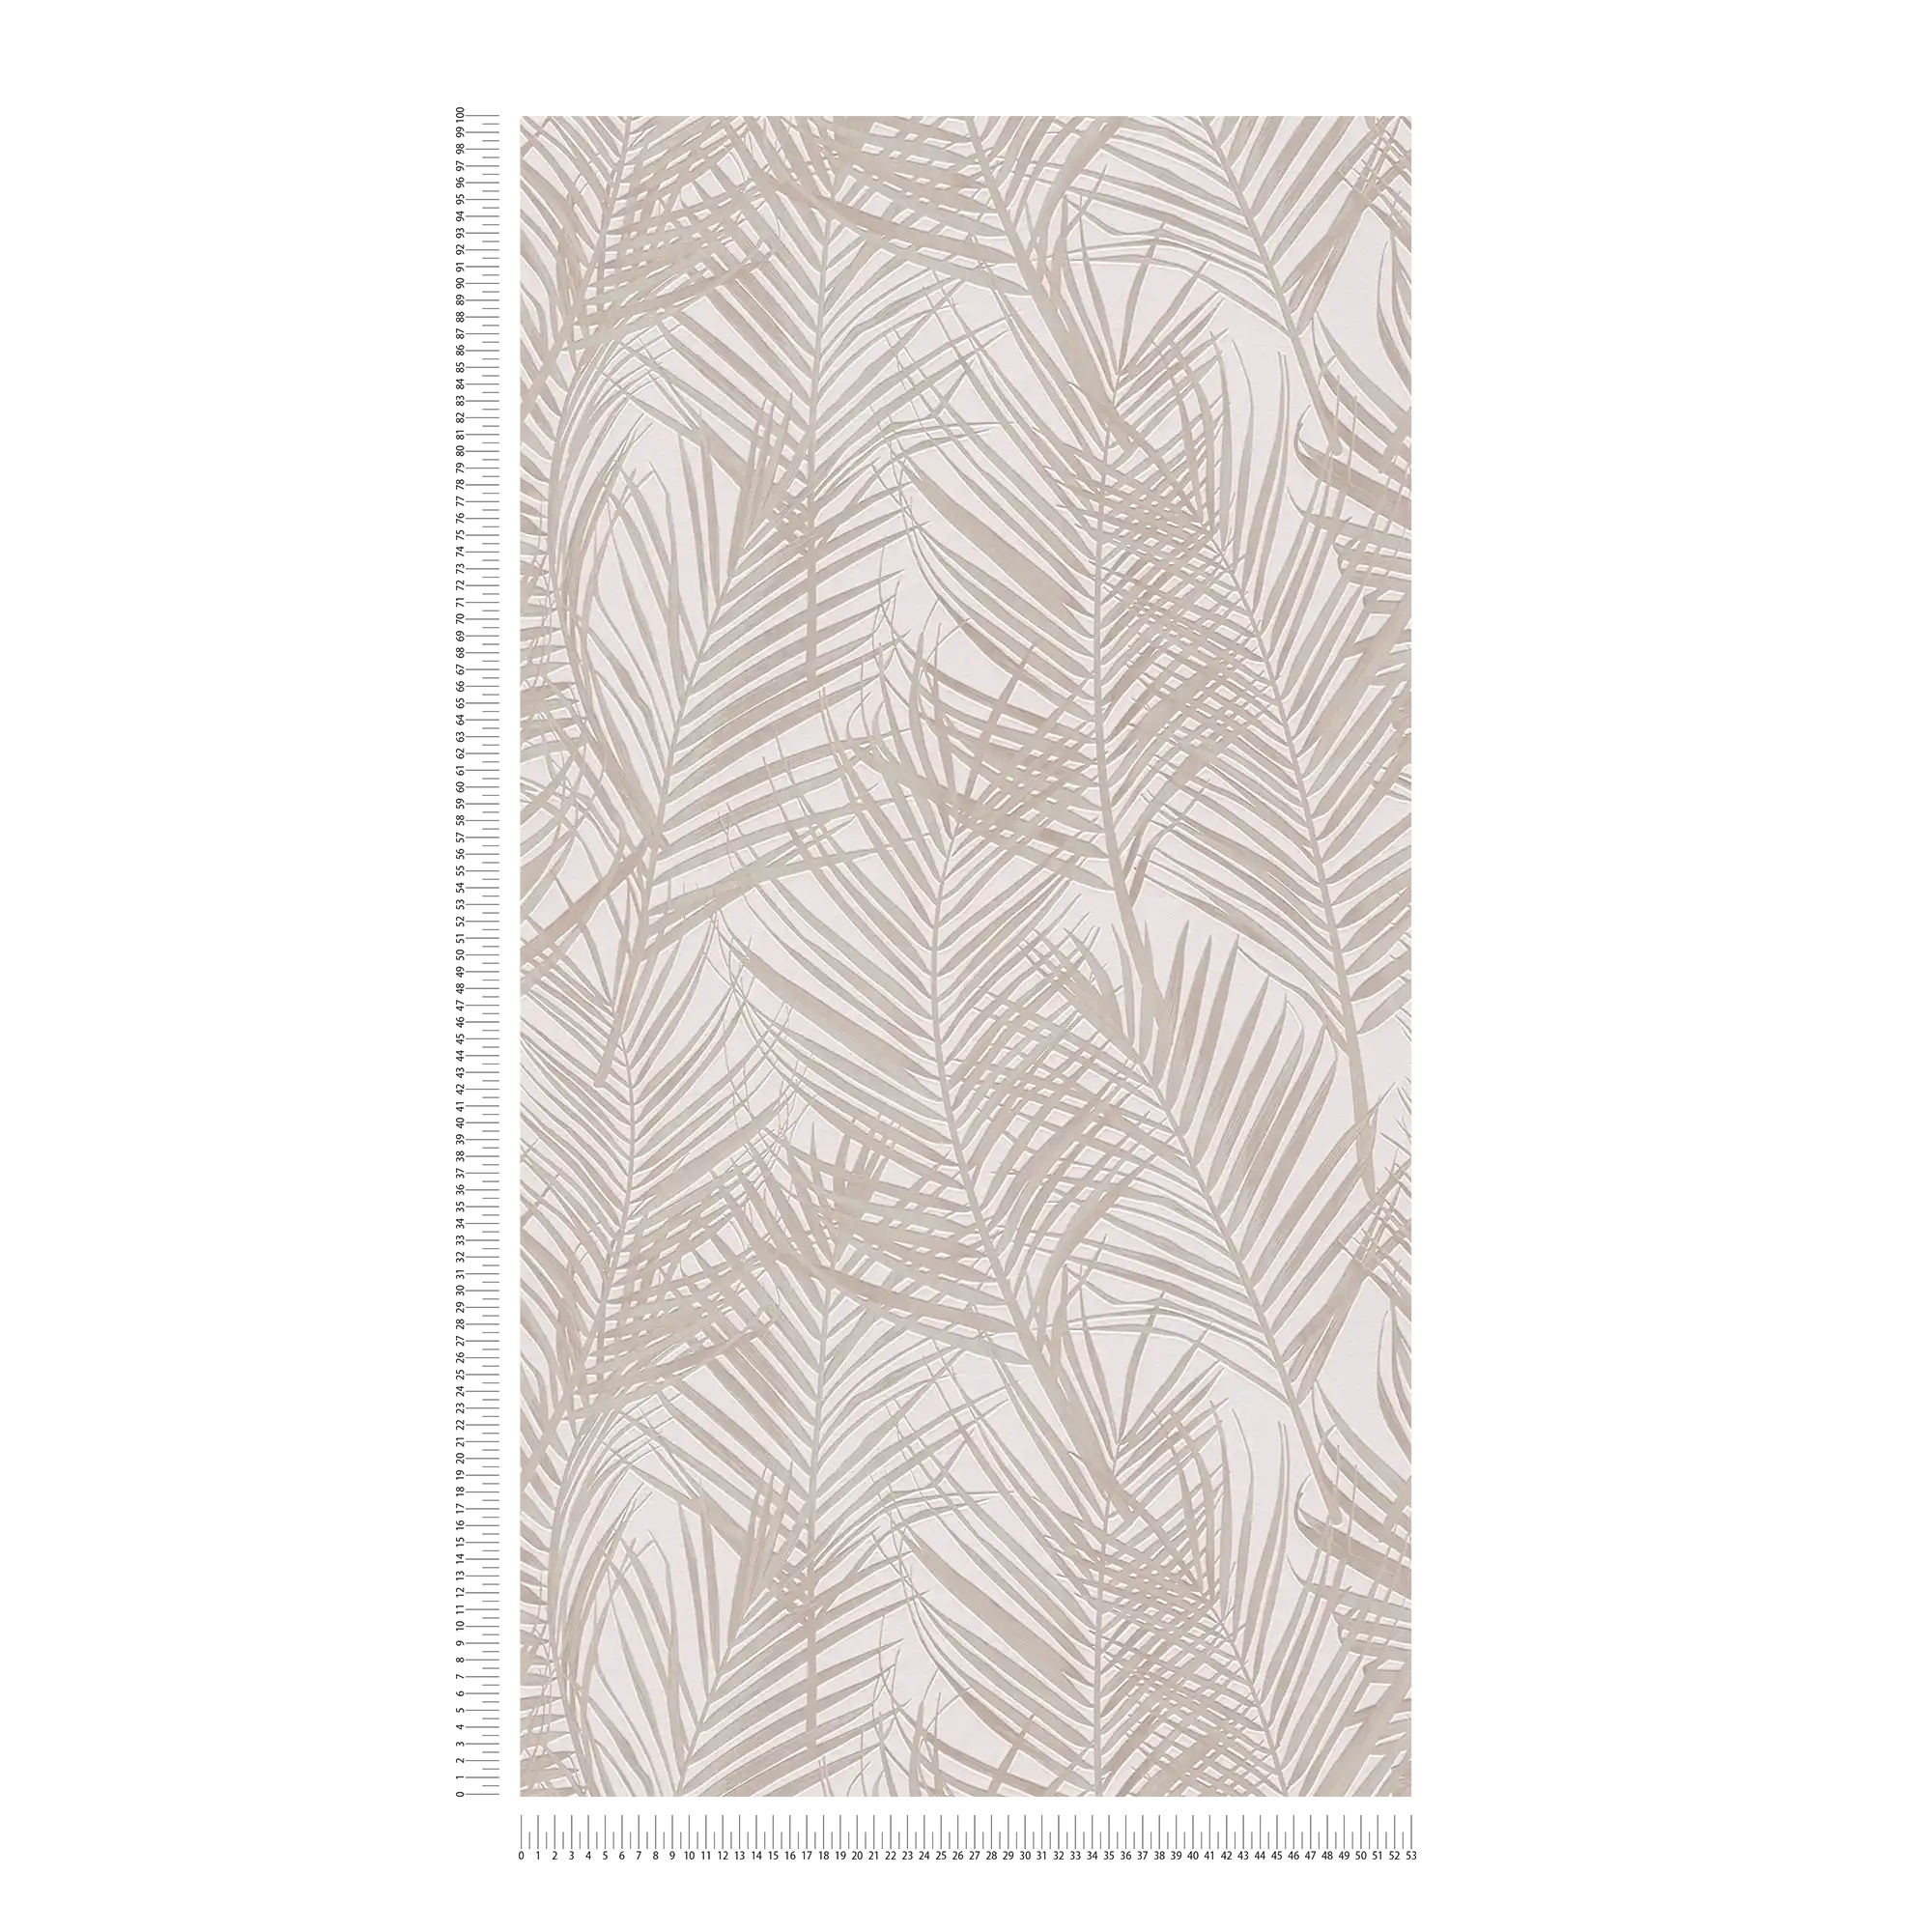             Pattern wallpaper with palm leaves in matt - white, cream
        